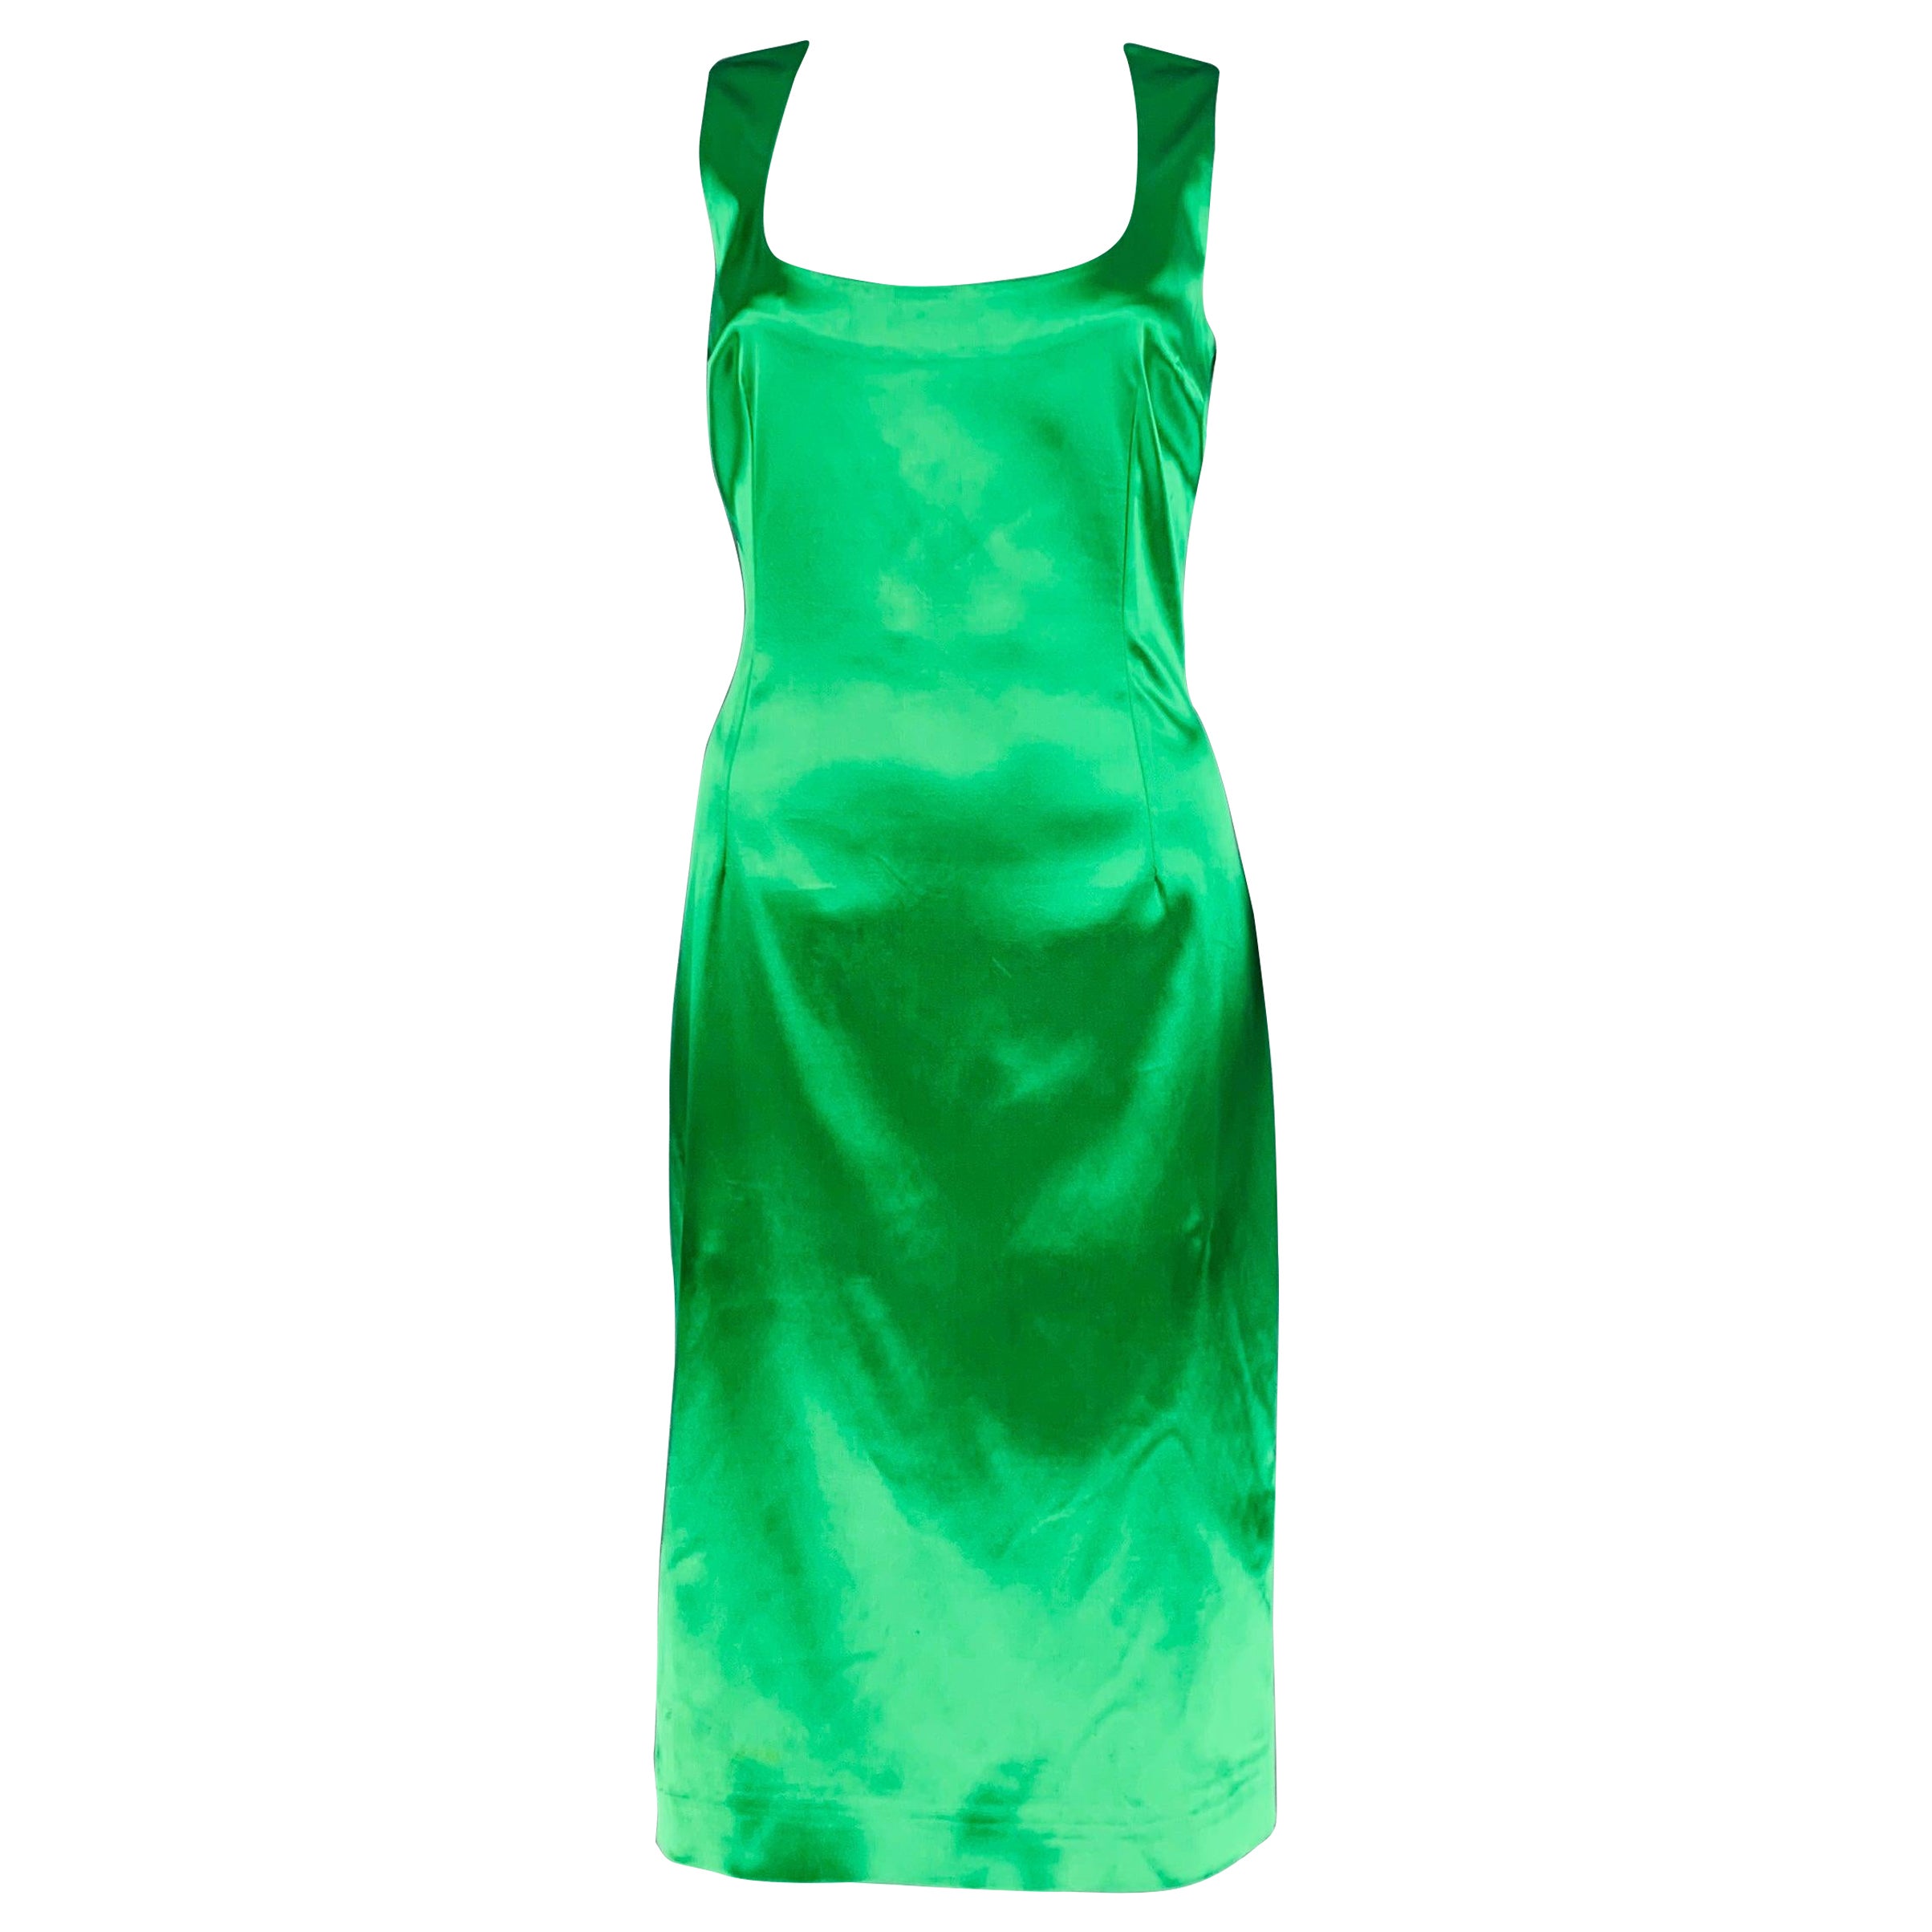 DOLCE & GABBANA Size 8 Green Acetate Blend Sleeveless Mid-Calf Cocktail Dress For Sale